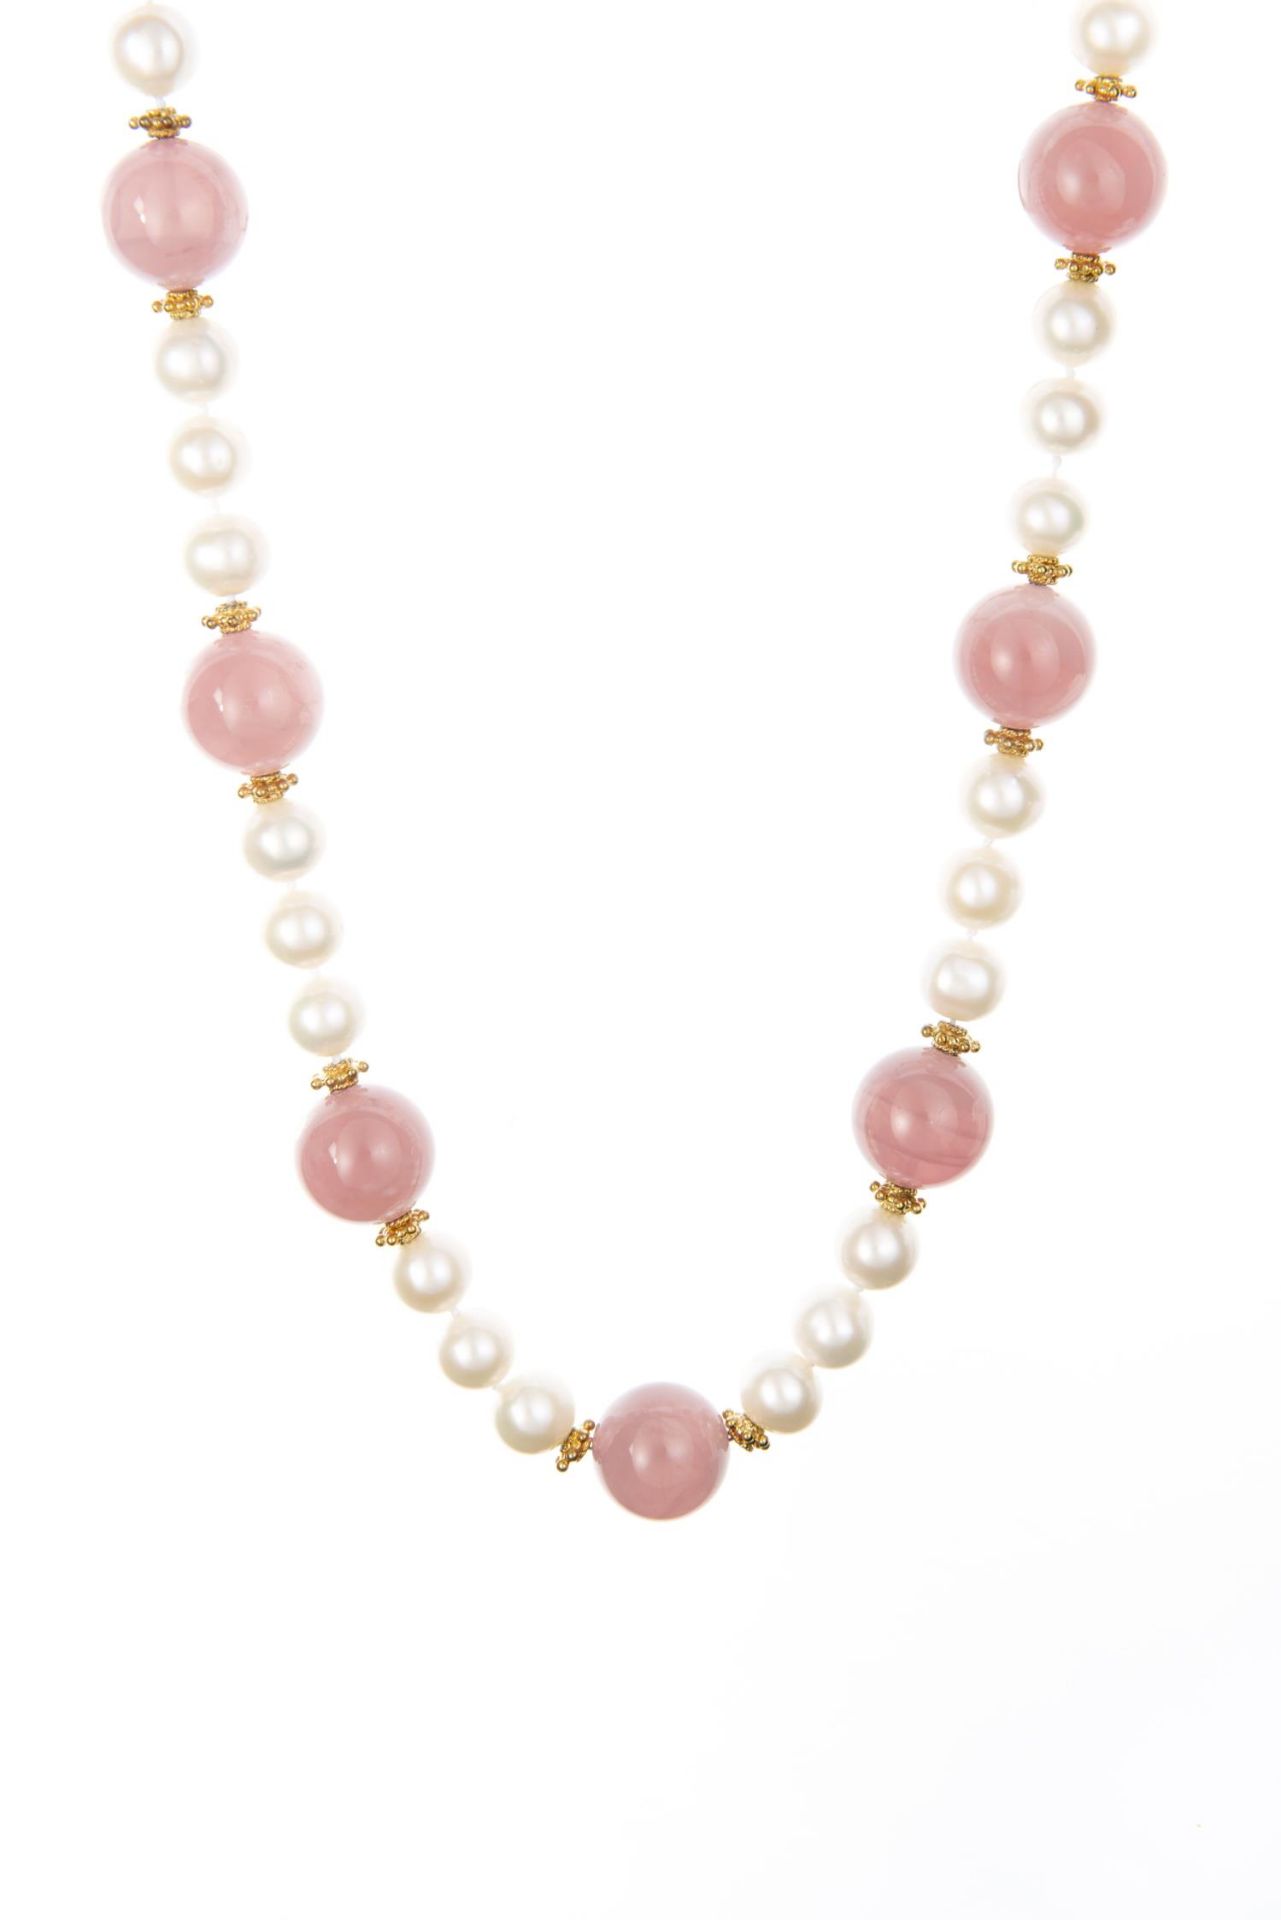 Collier de perles et quartz rose de Madagascar, sign&amp;eacute; R&amp;eacute;gine S....